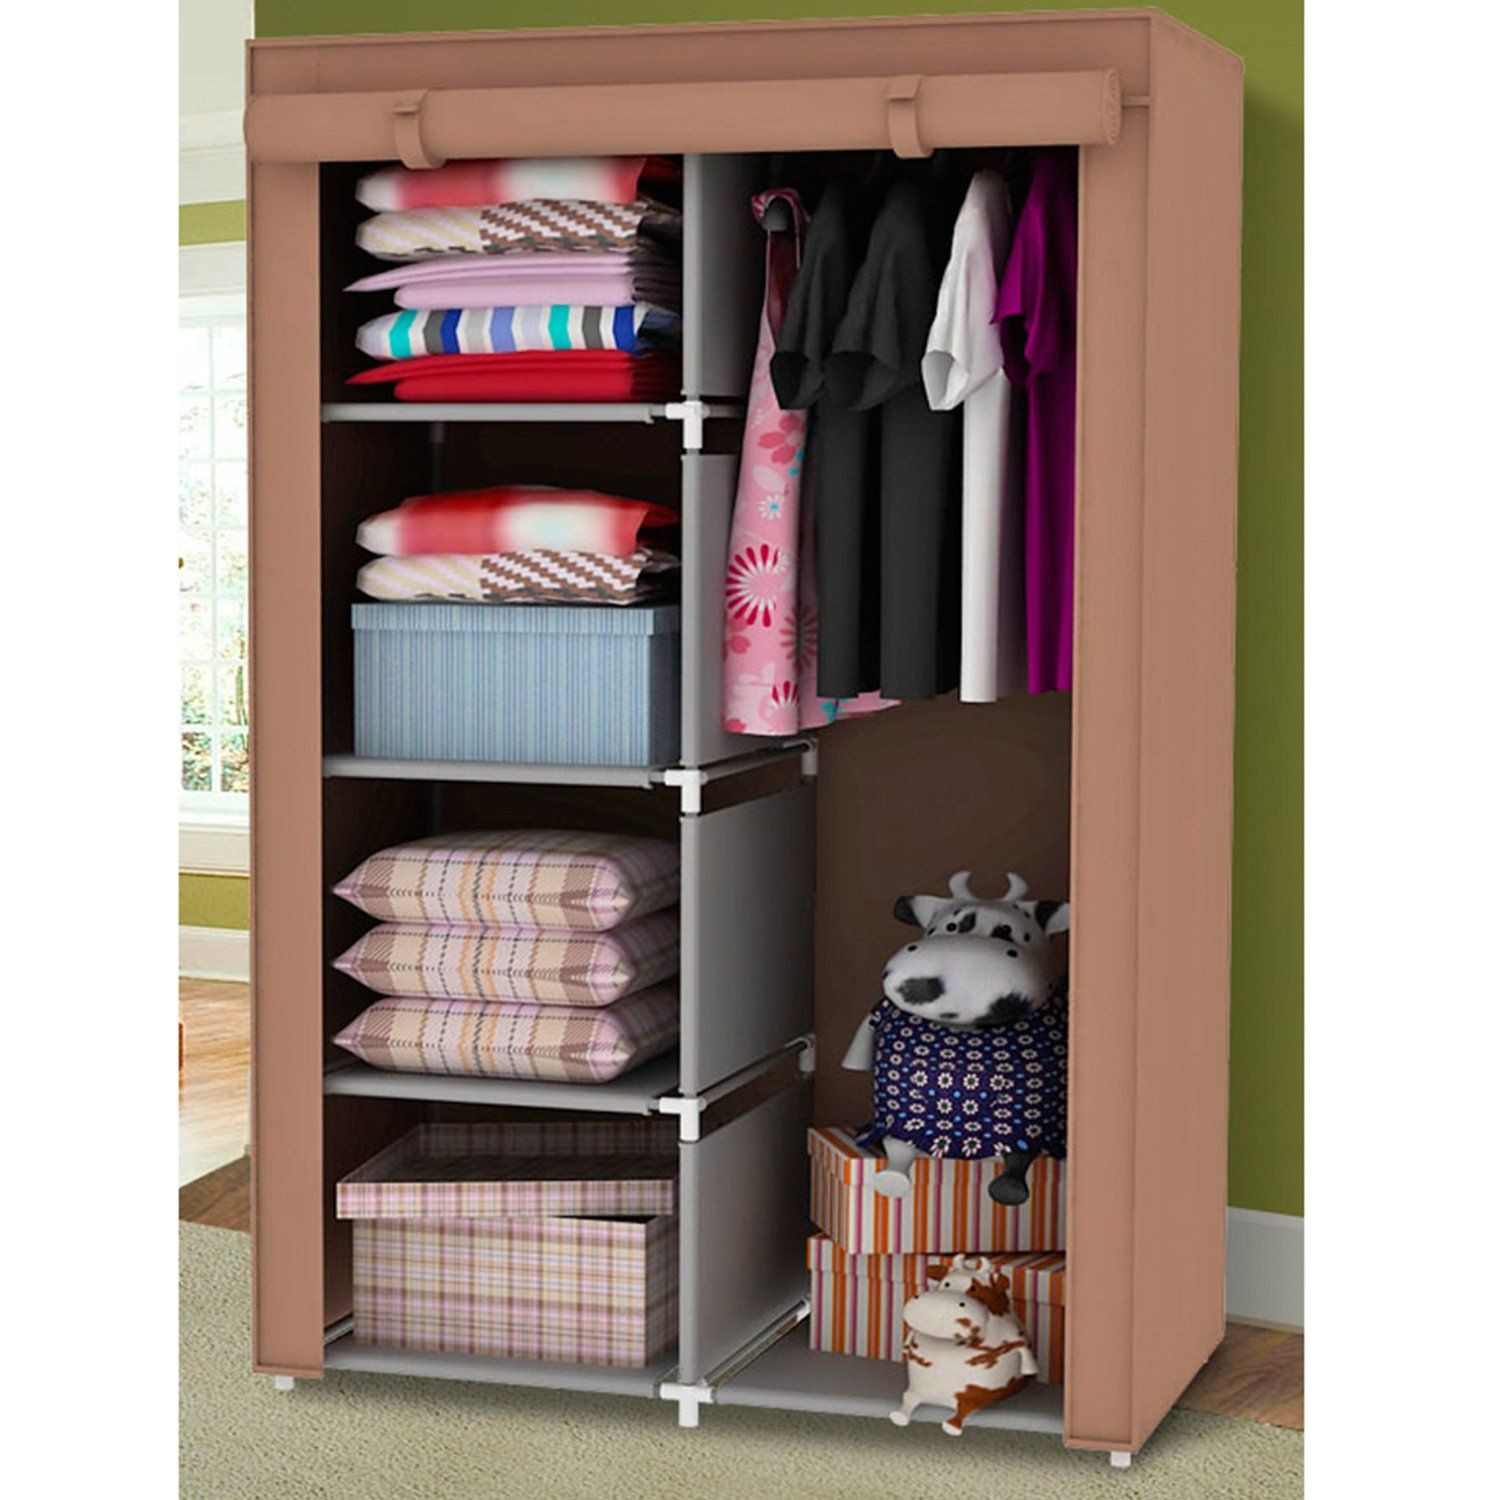 Clothes Storage Ideas For Bedroom
 Amazon Portable Wardrobe Storage Clothes Closet with